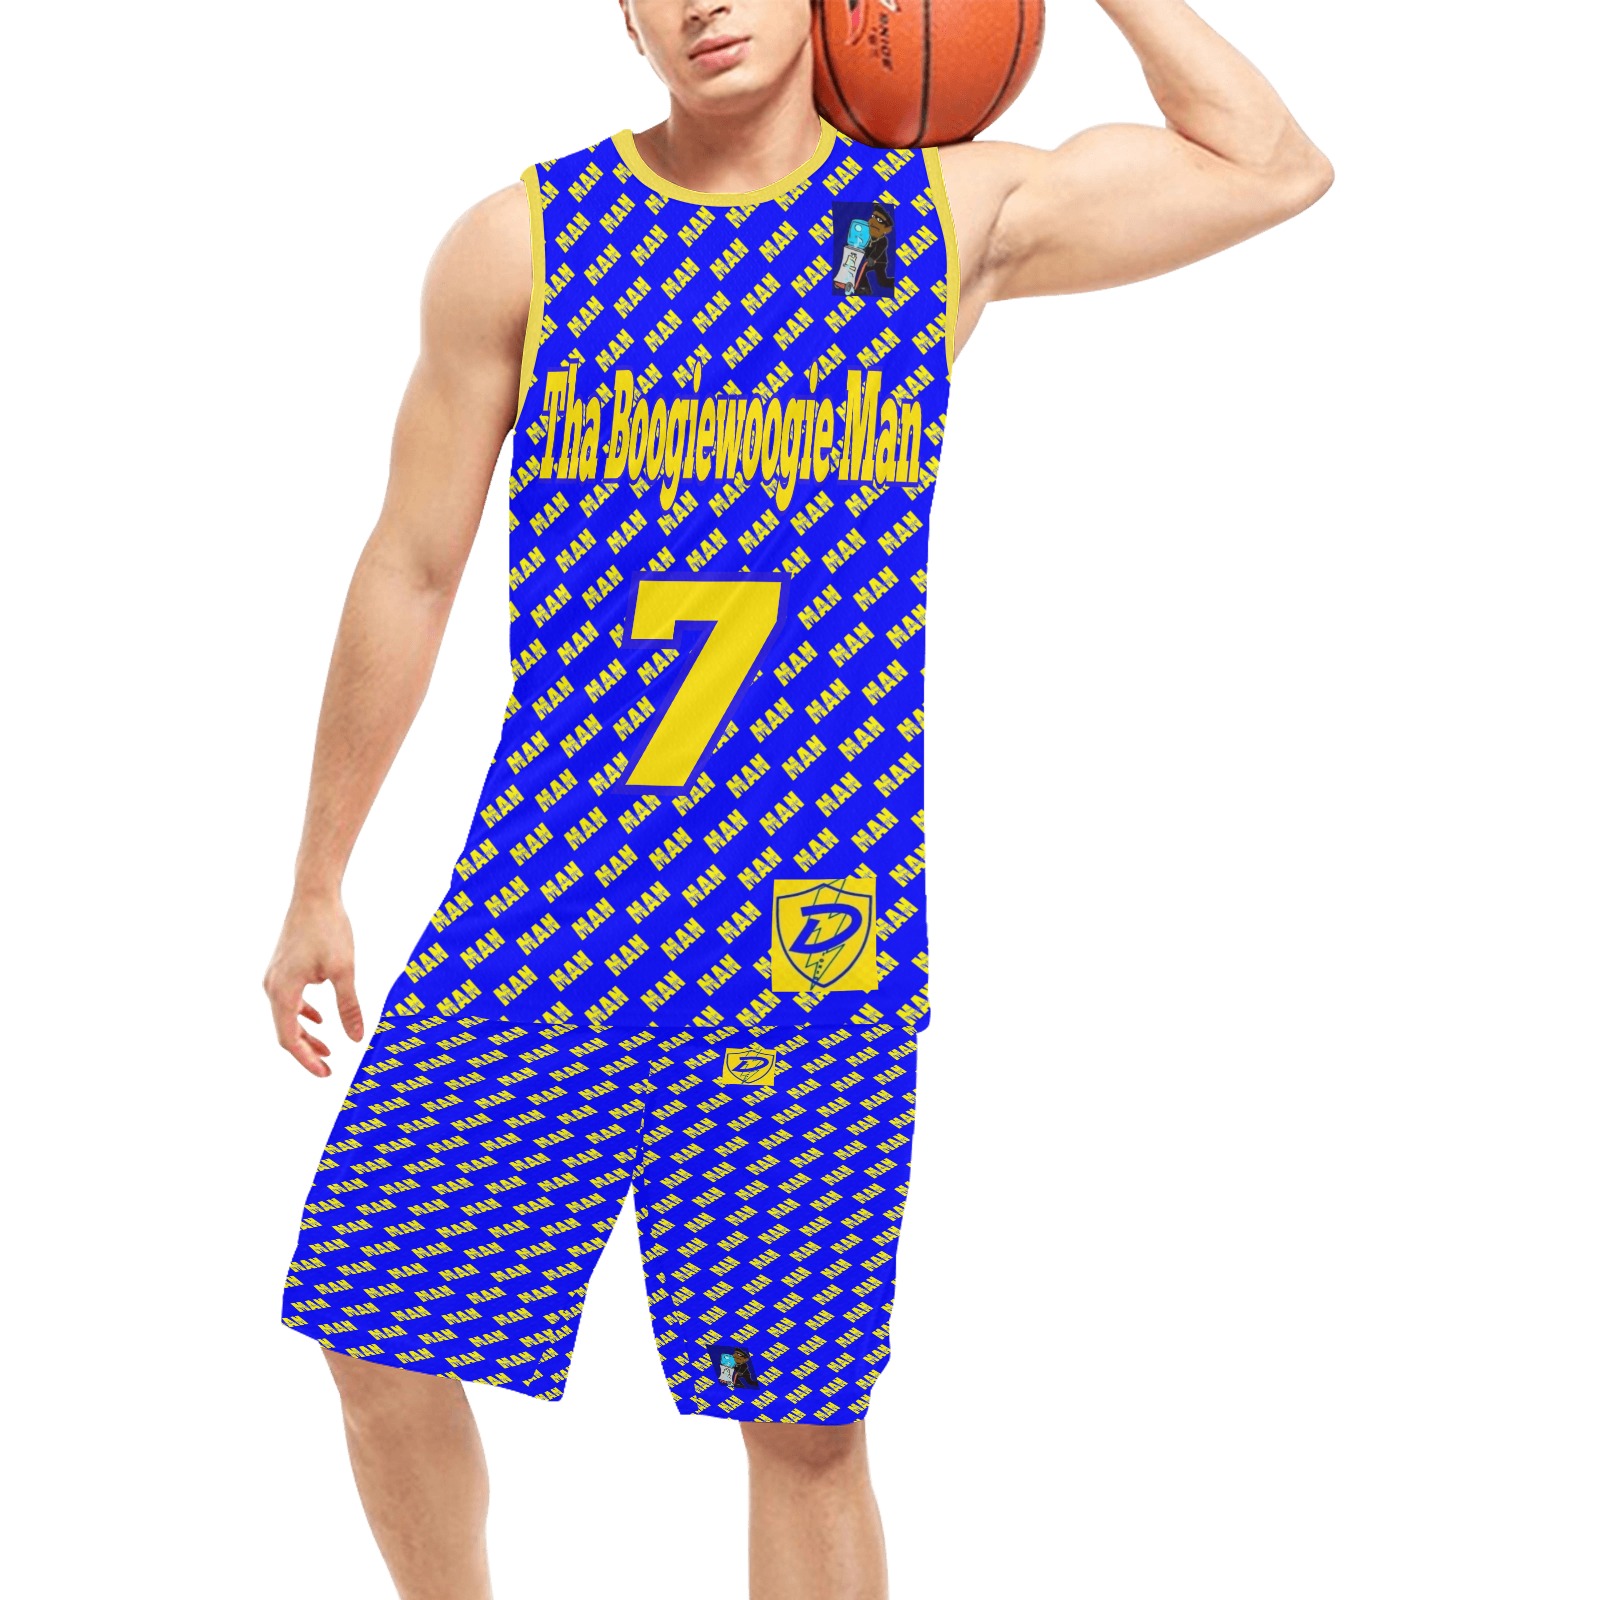 Tha Boogiewoogie Man Basketball Jersey & Shorts(Uniform Blue & Yellow Logo Repeat) Basketball Uniform with Pocket